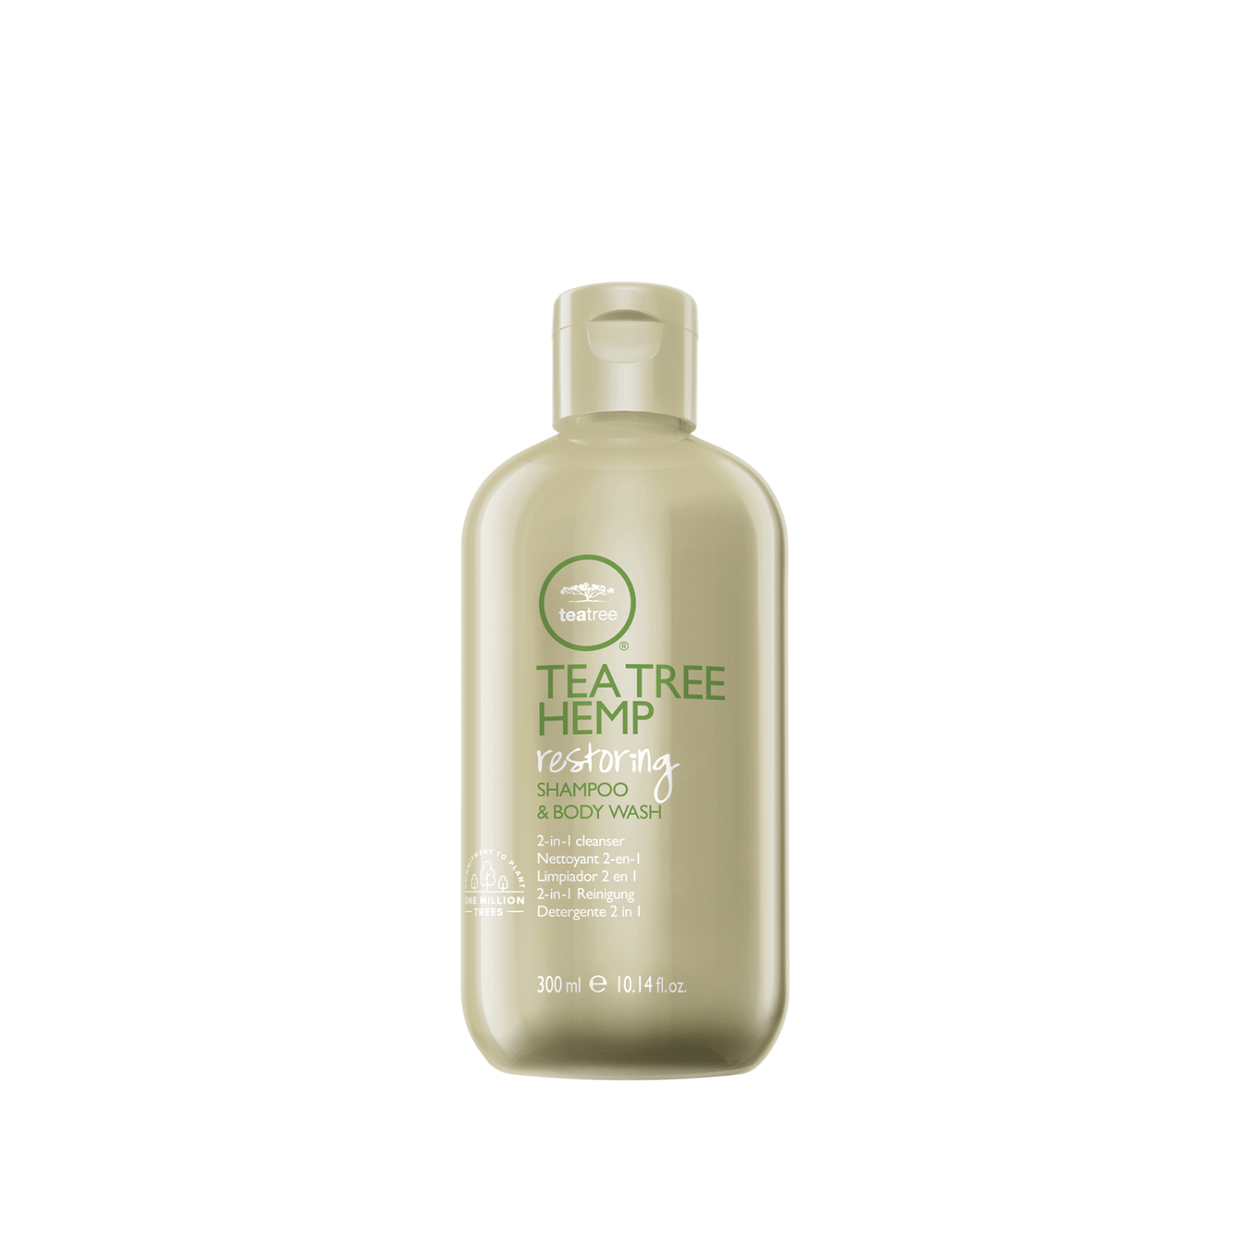 Tea Tree Hemp Restoring Shampoo & Body Wash - 300ML - by Paul Mitchell |ProCare Outlet|